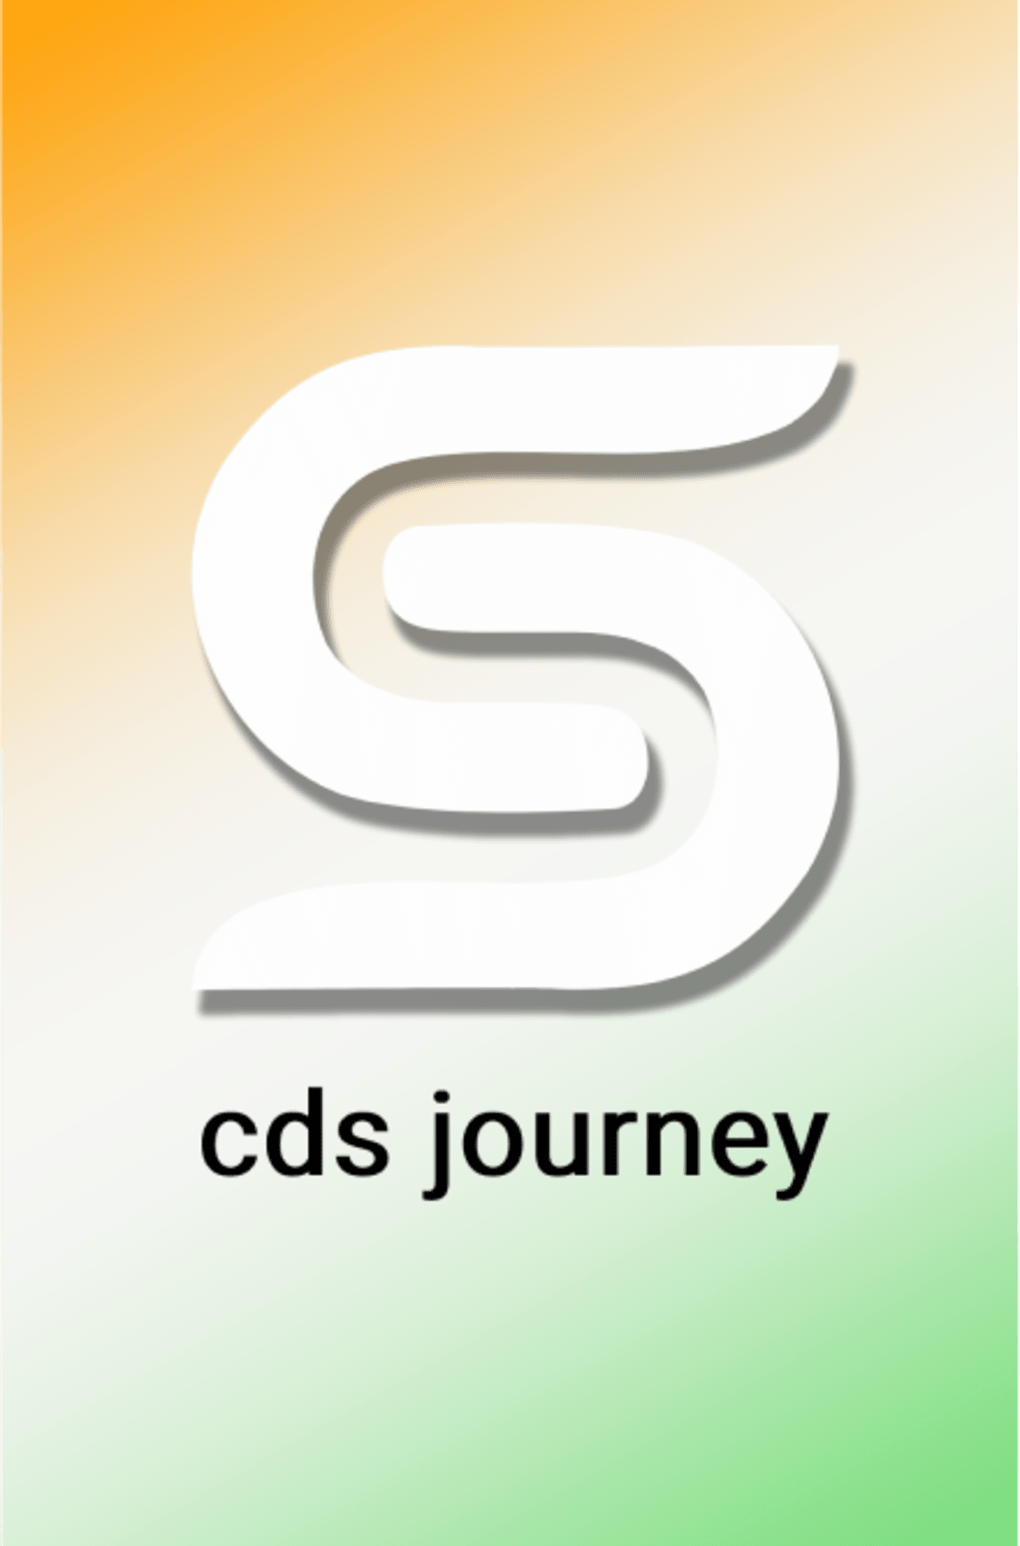 cds journey log in